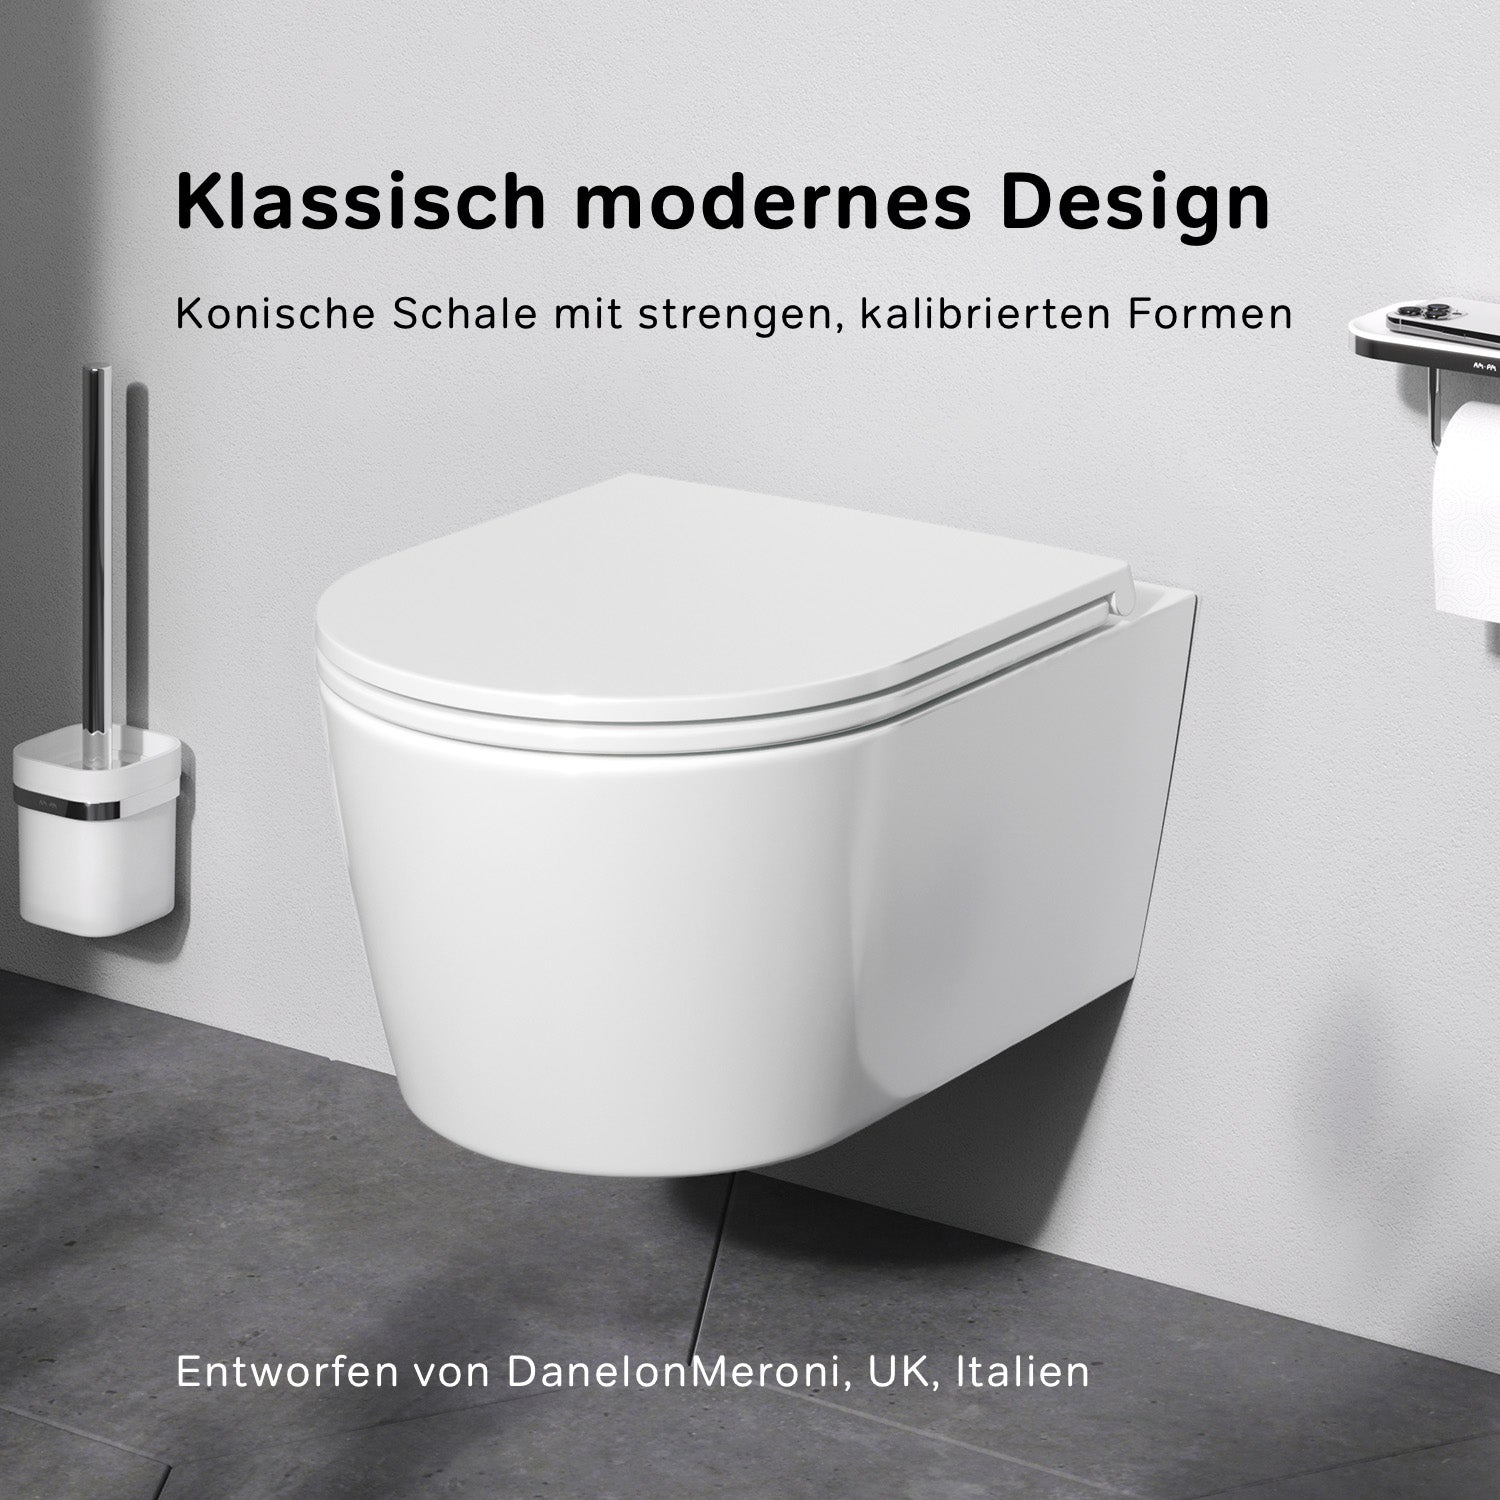 CFA1700SC Func FlashClean Spülrandloses Wand-WC mit Softclosing-Sitzabdeckung